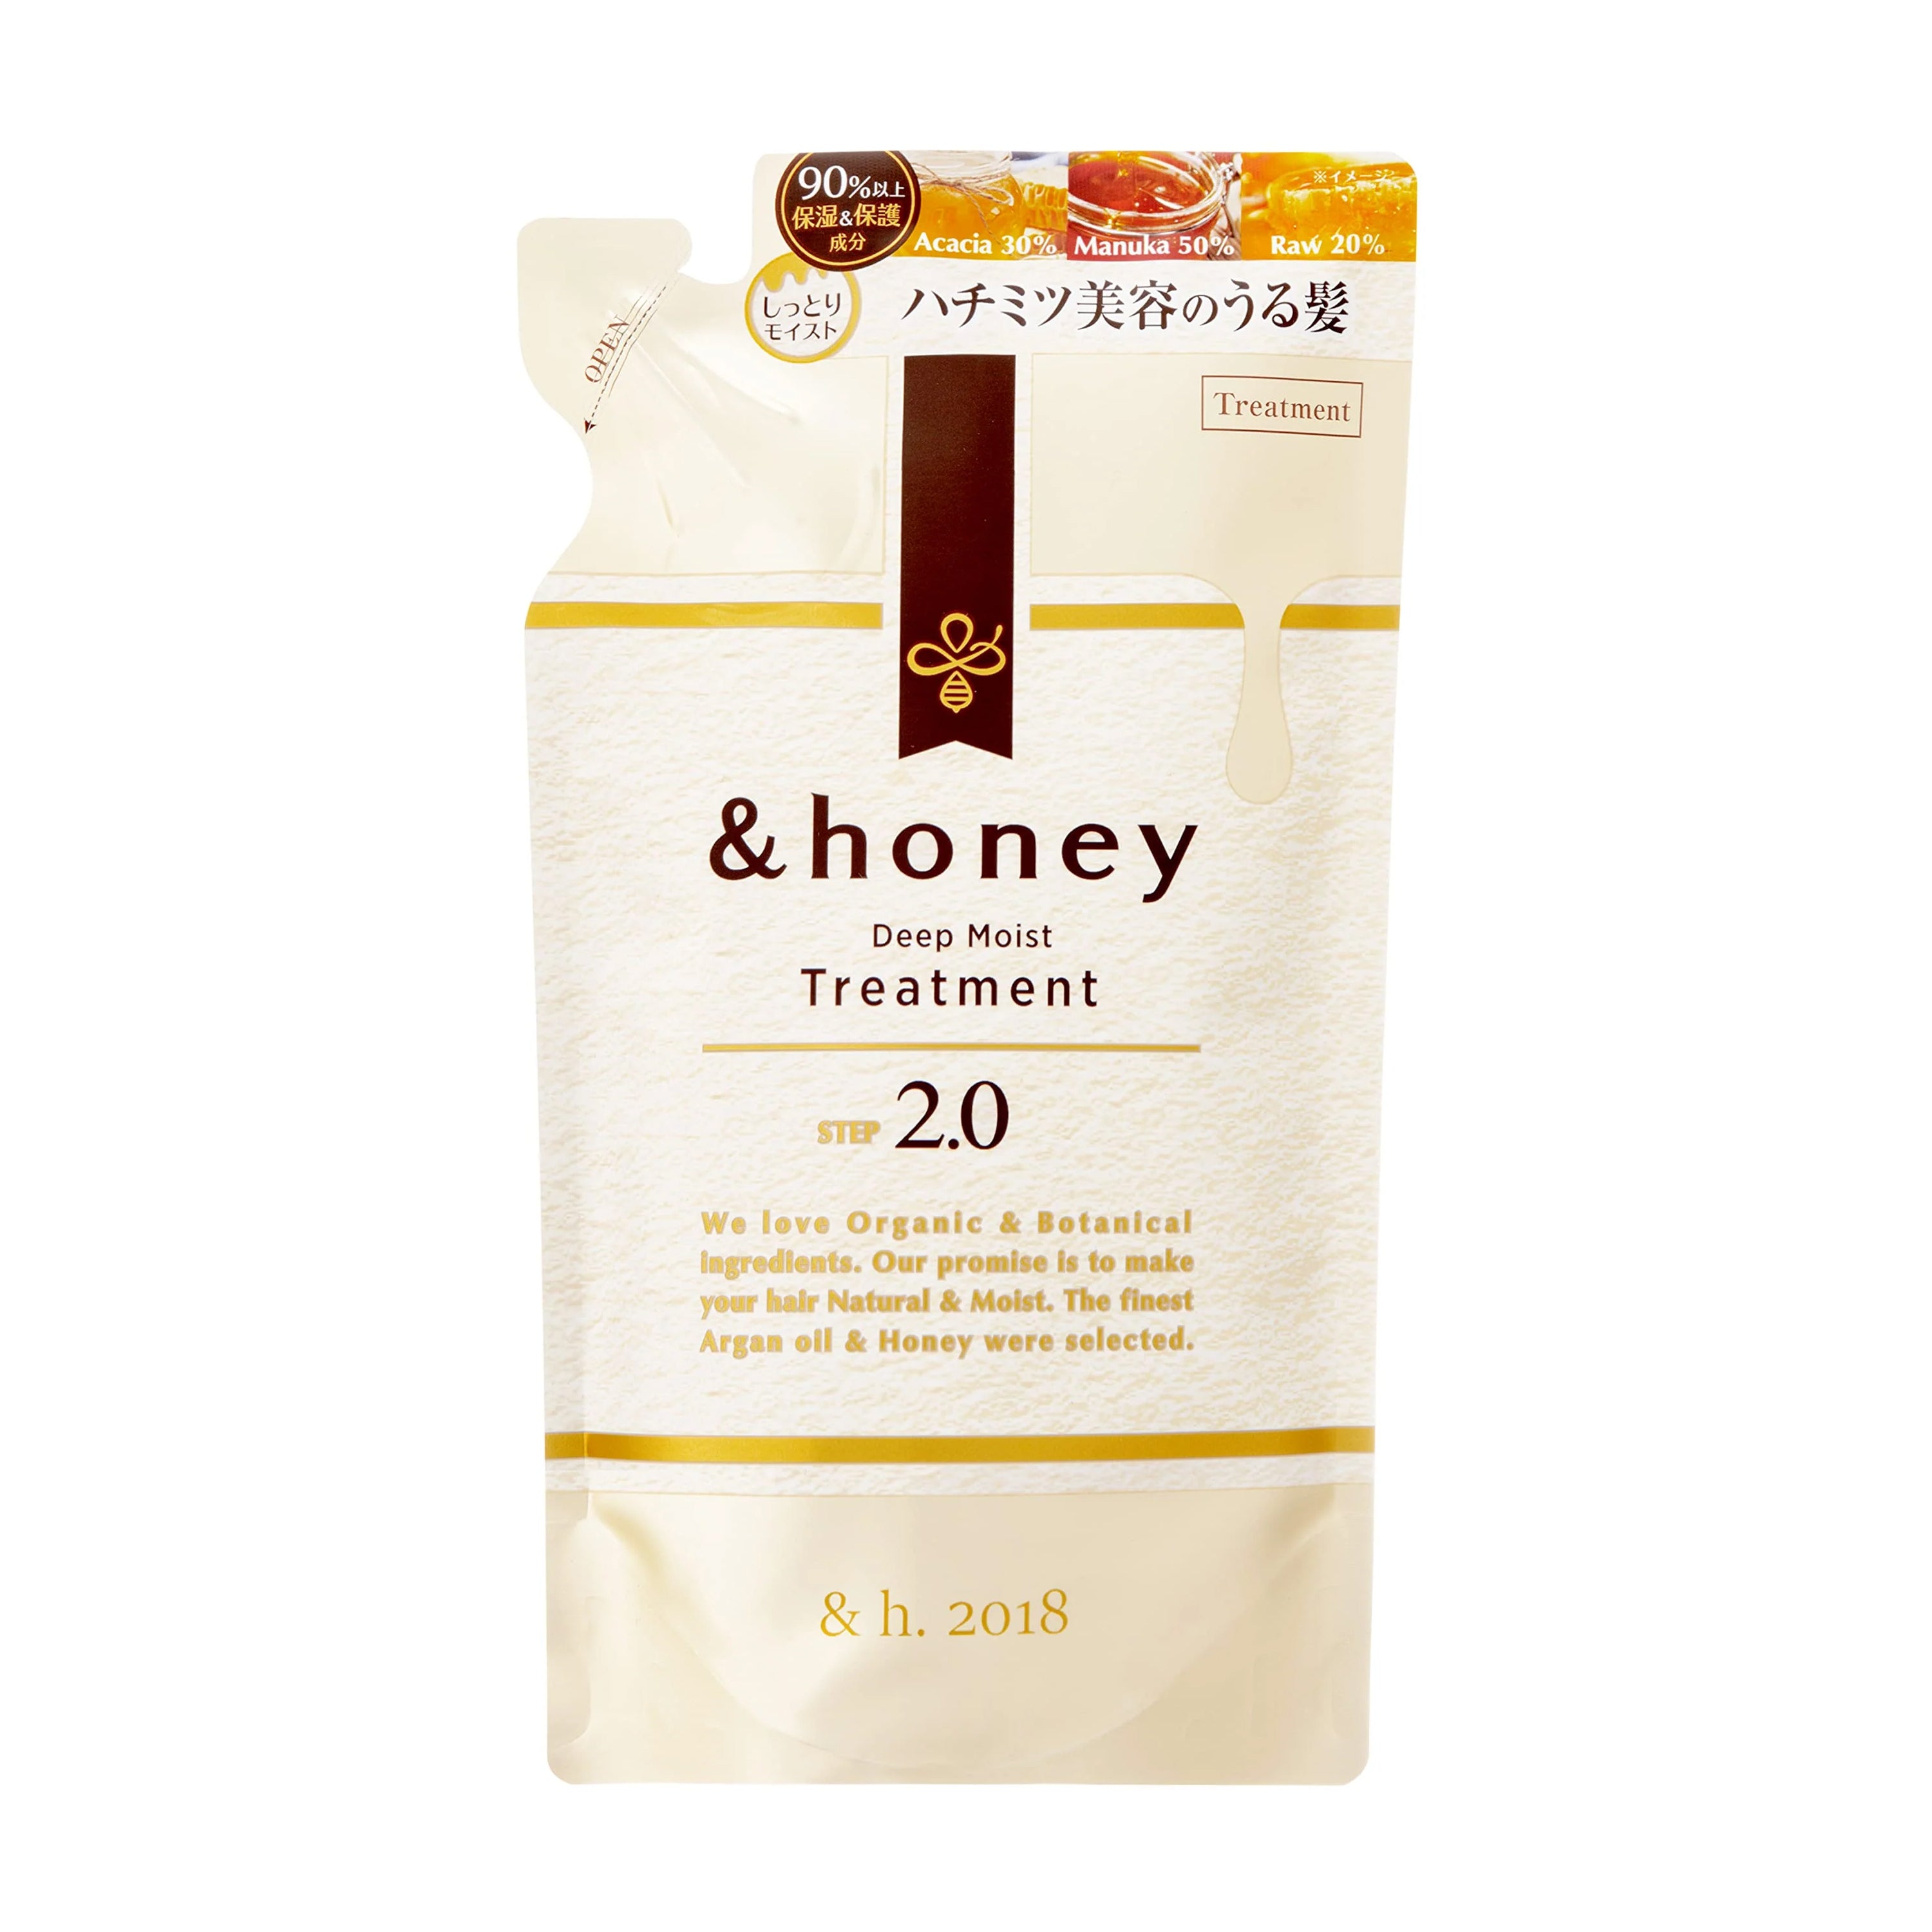 ViCREA & honey Honey Deep Moist Treatment